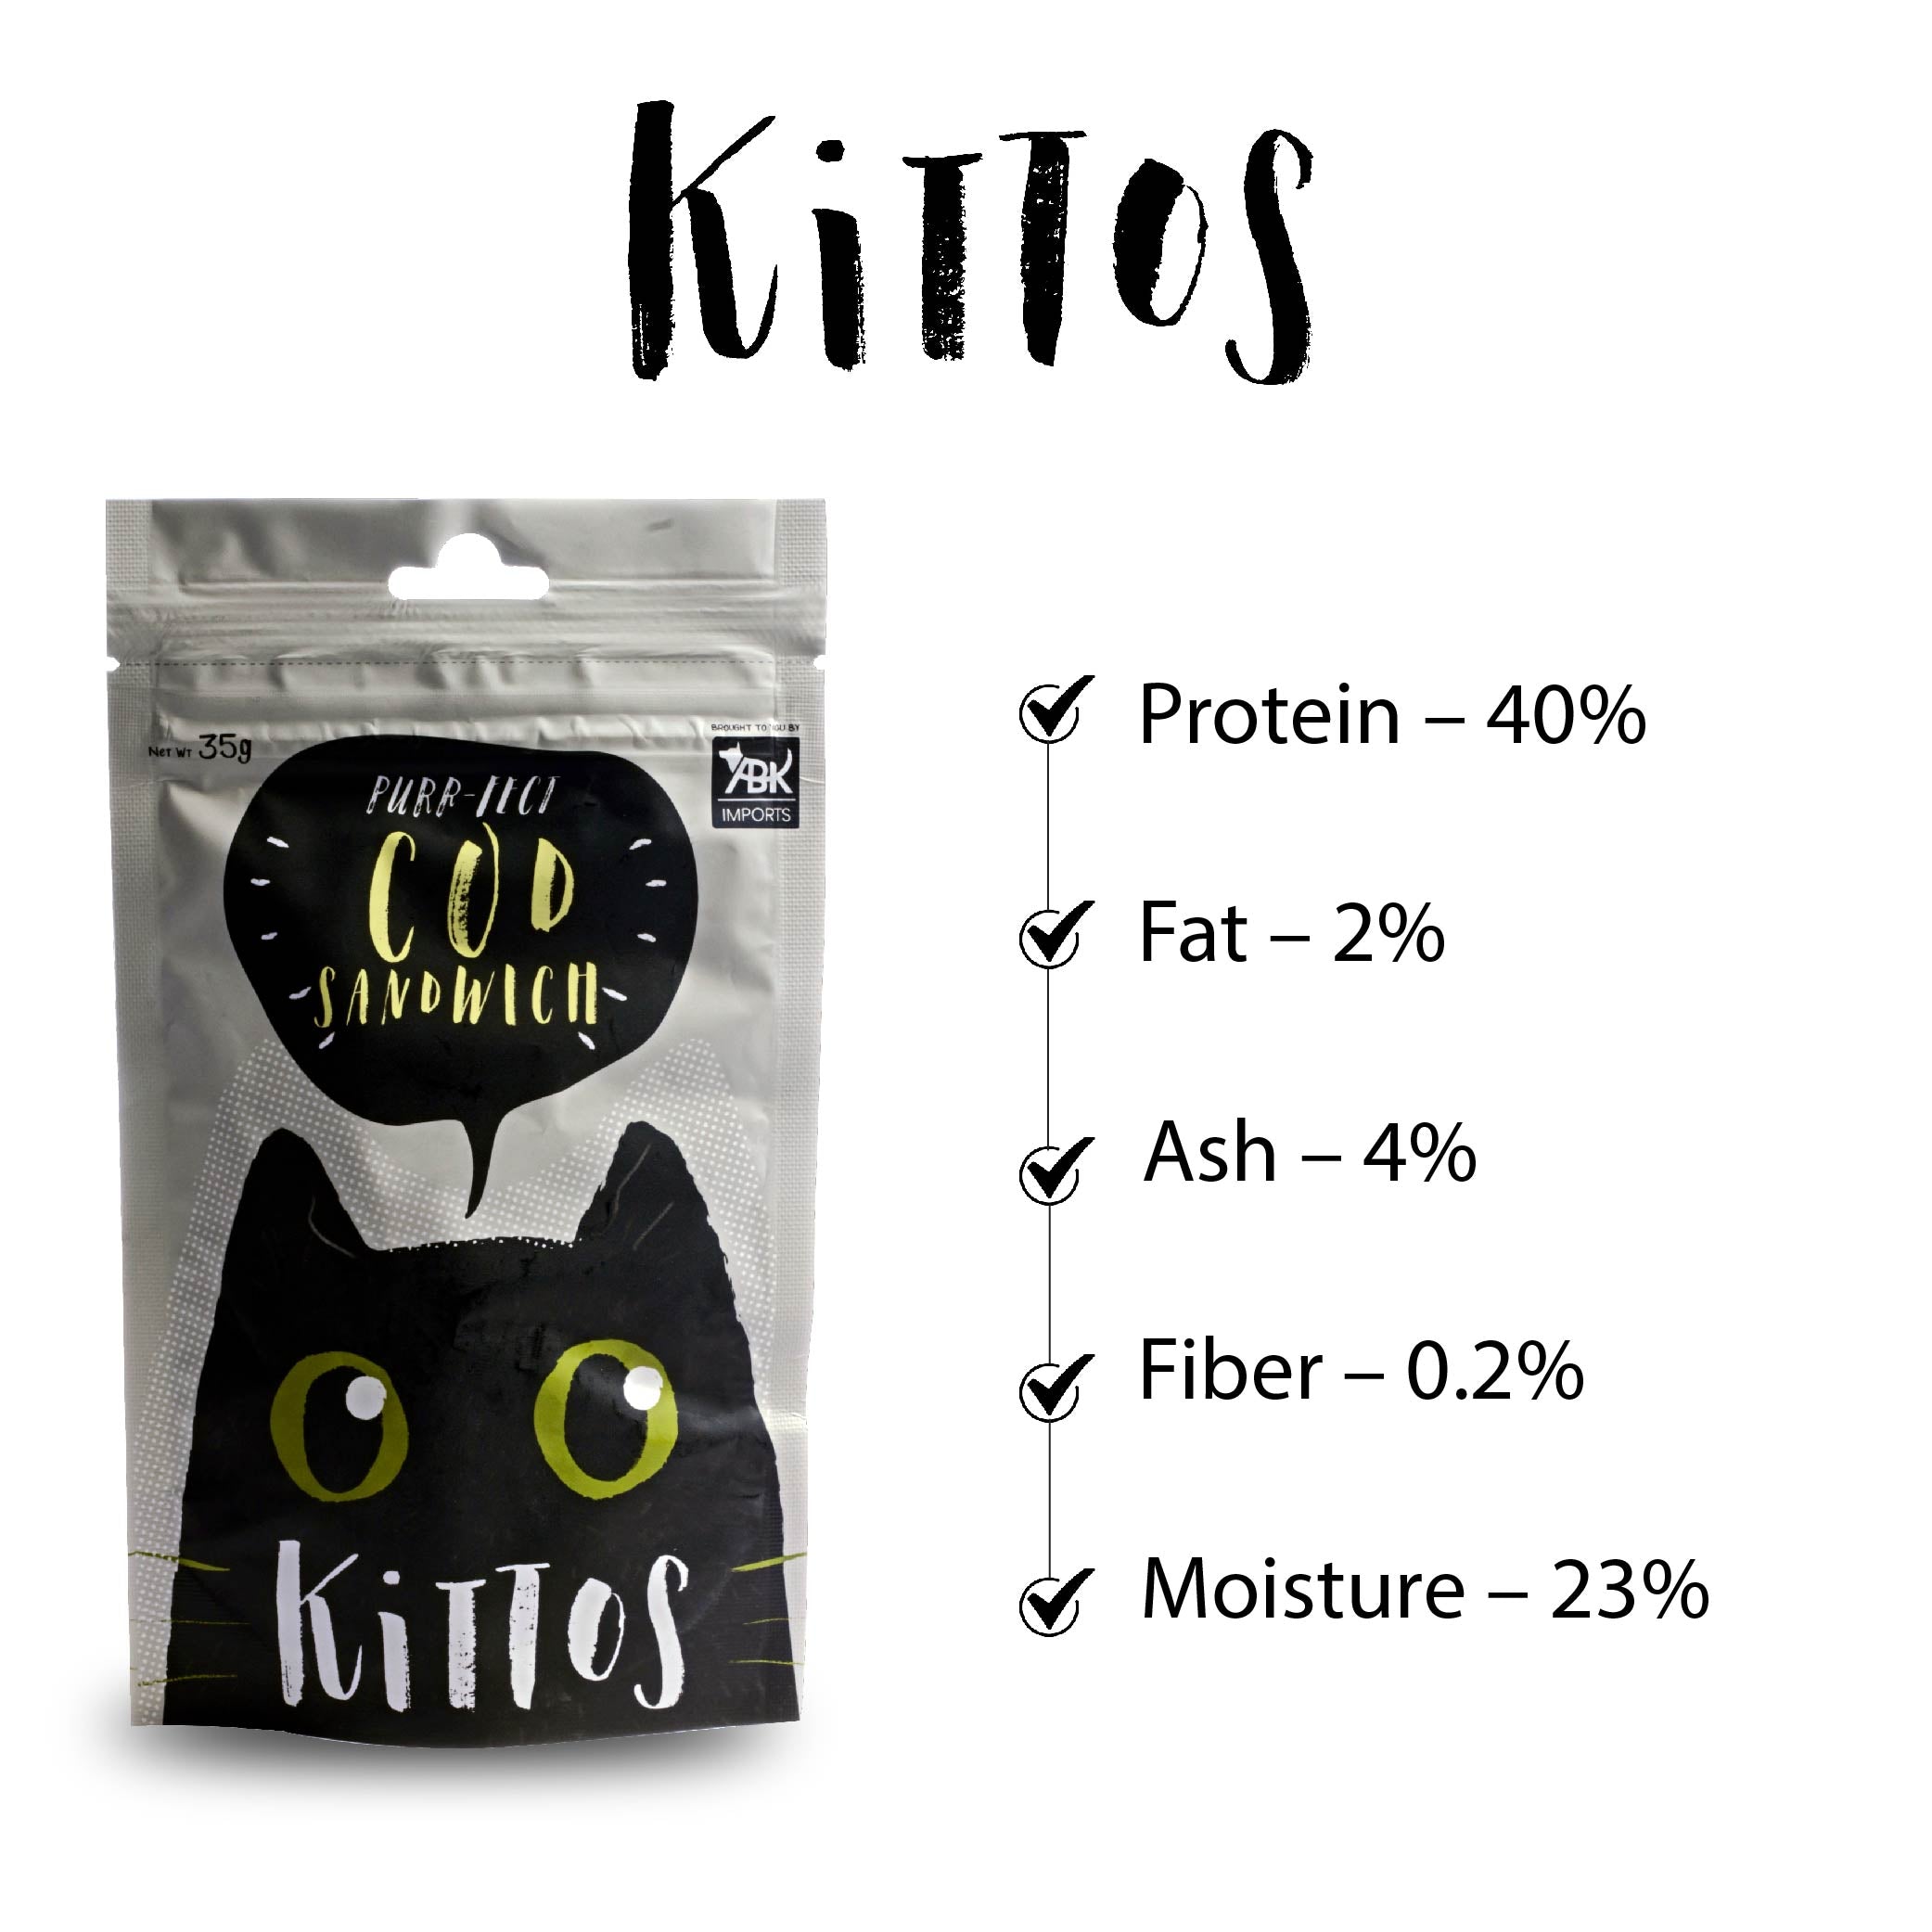 Kittos - Cod Sandwich Cat Treat (35 gms)